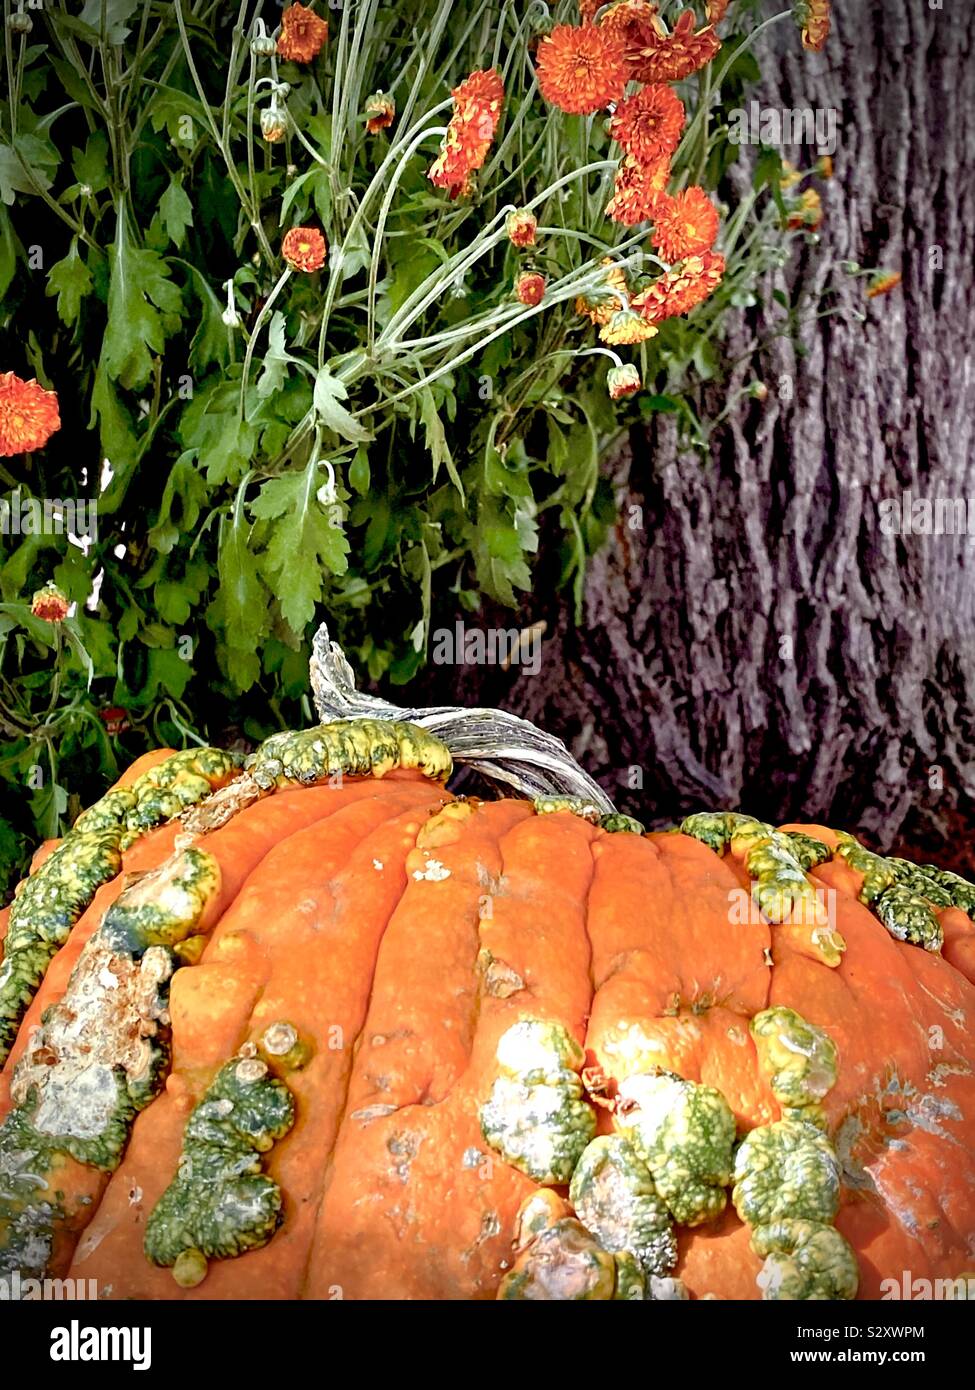 Warty pumpkin near tree and mums, a garden display Stock Photo